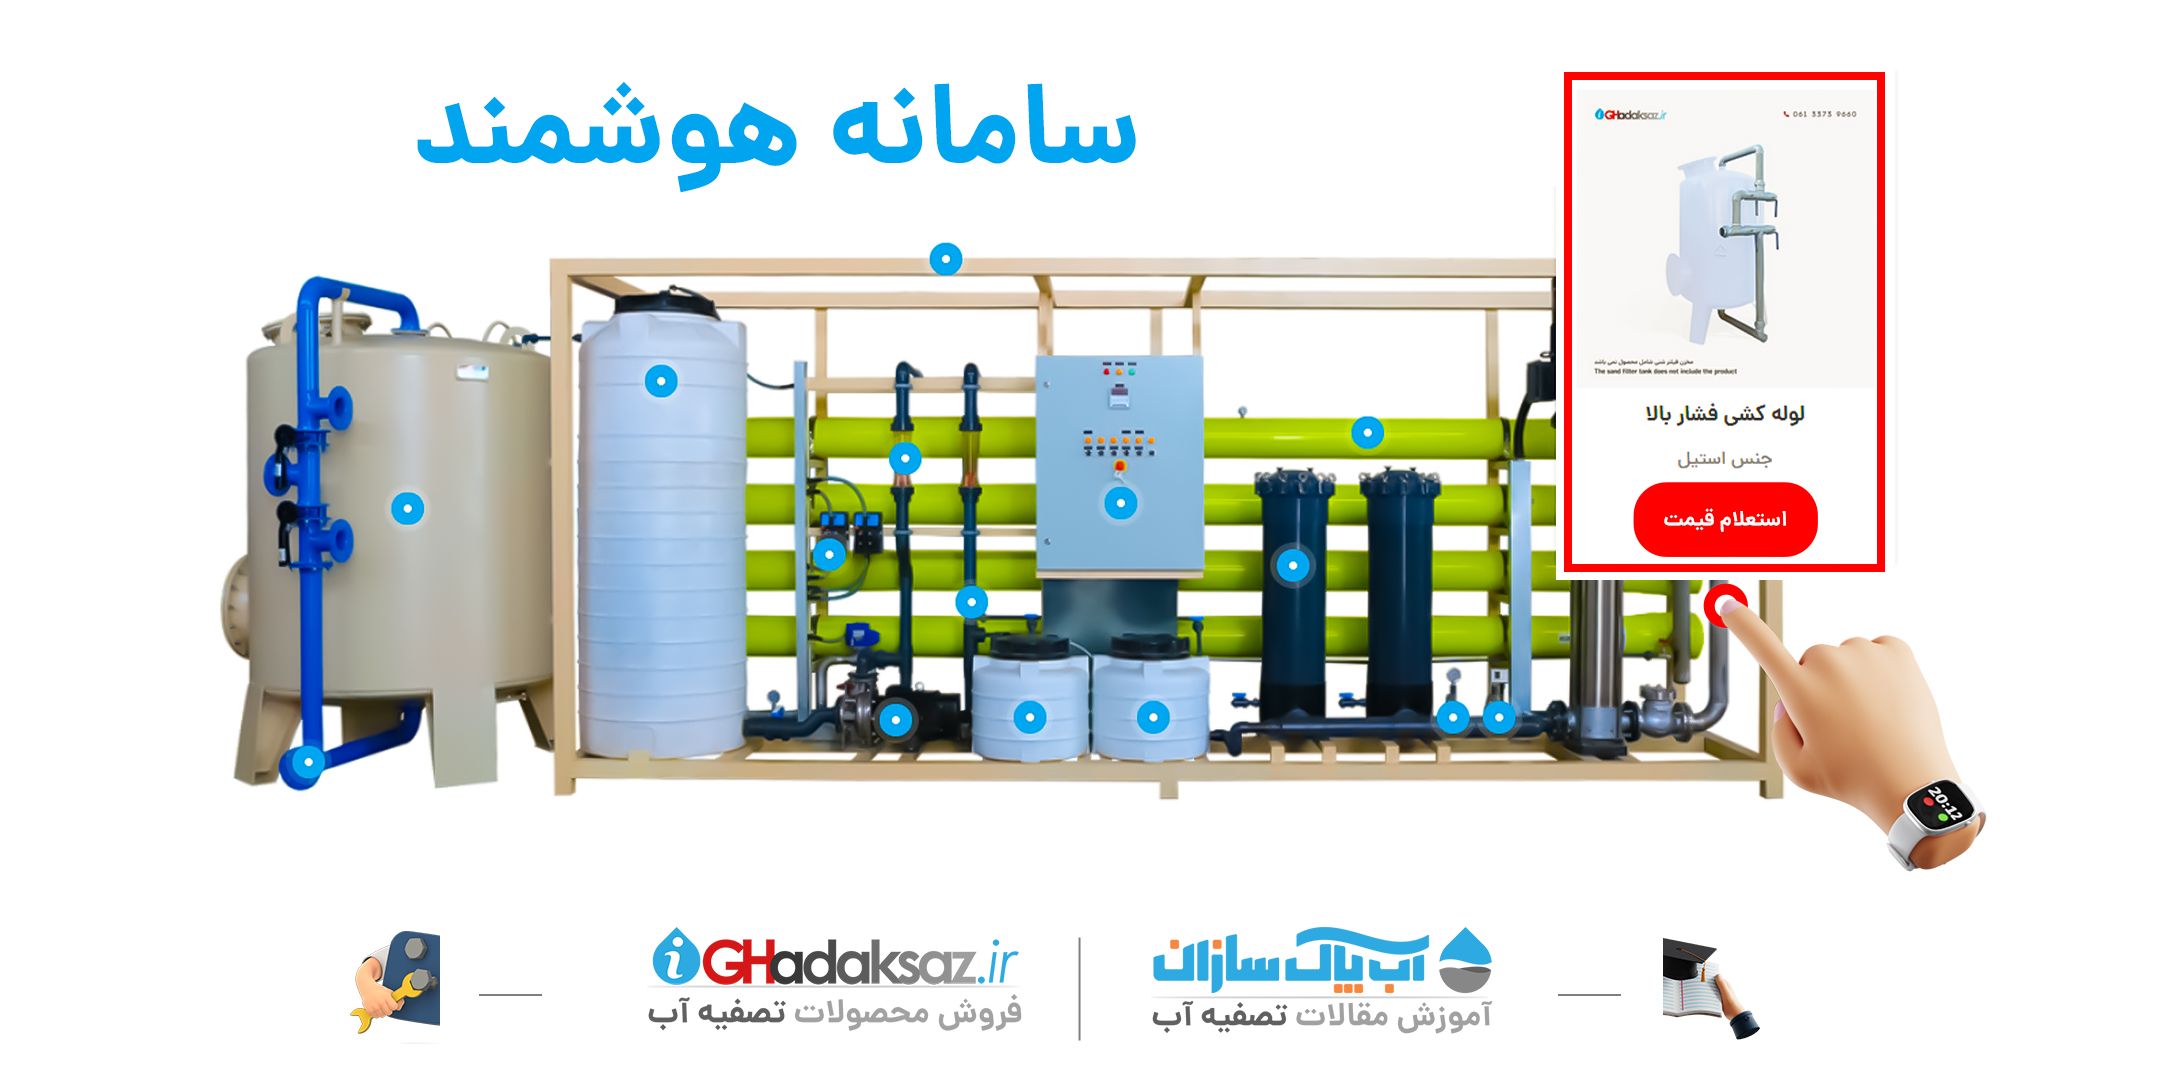 water treatment plant price in iran "abpaksazan" "ighadaksaz" Manufacturers